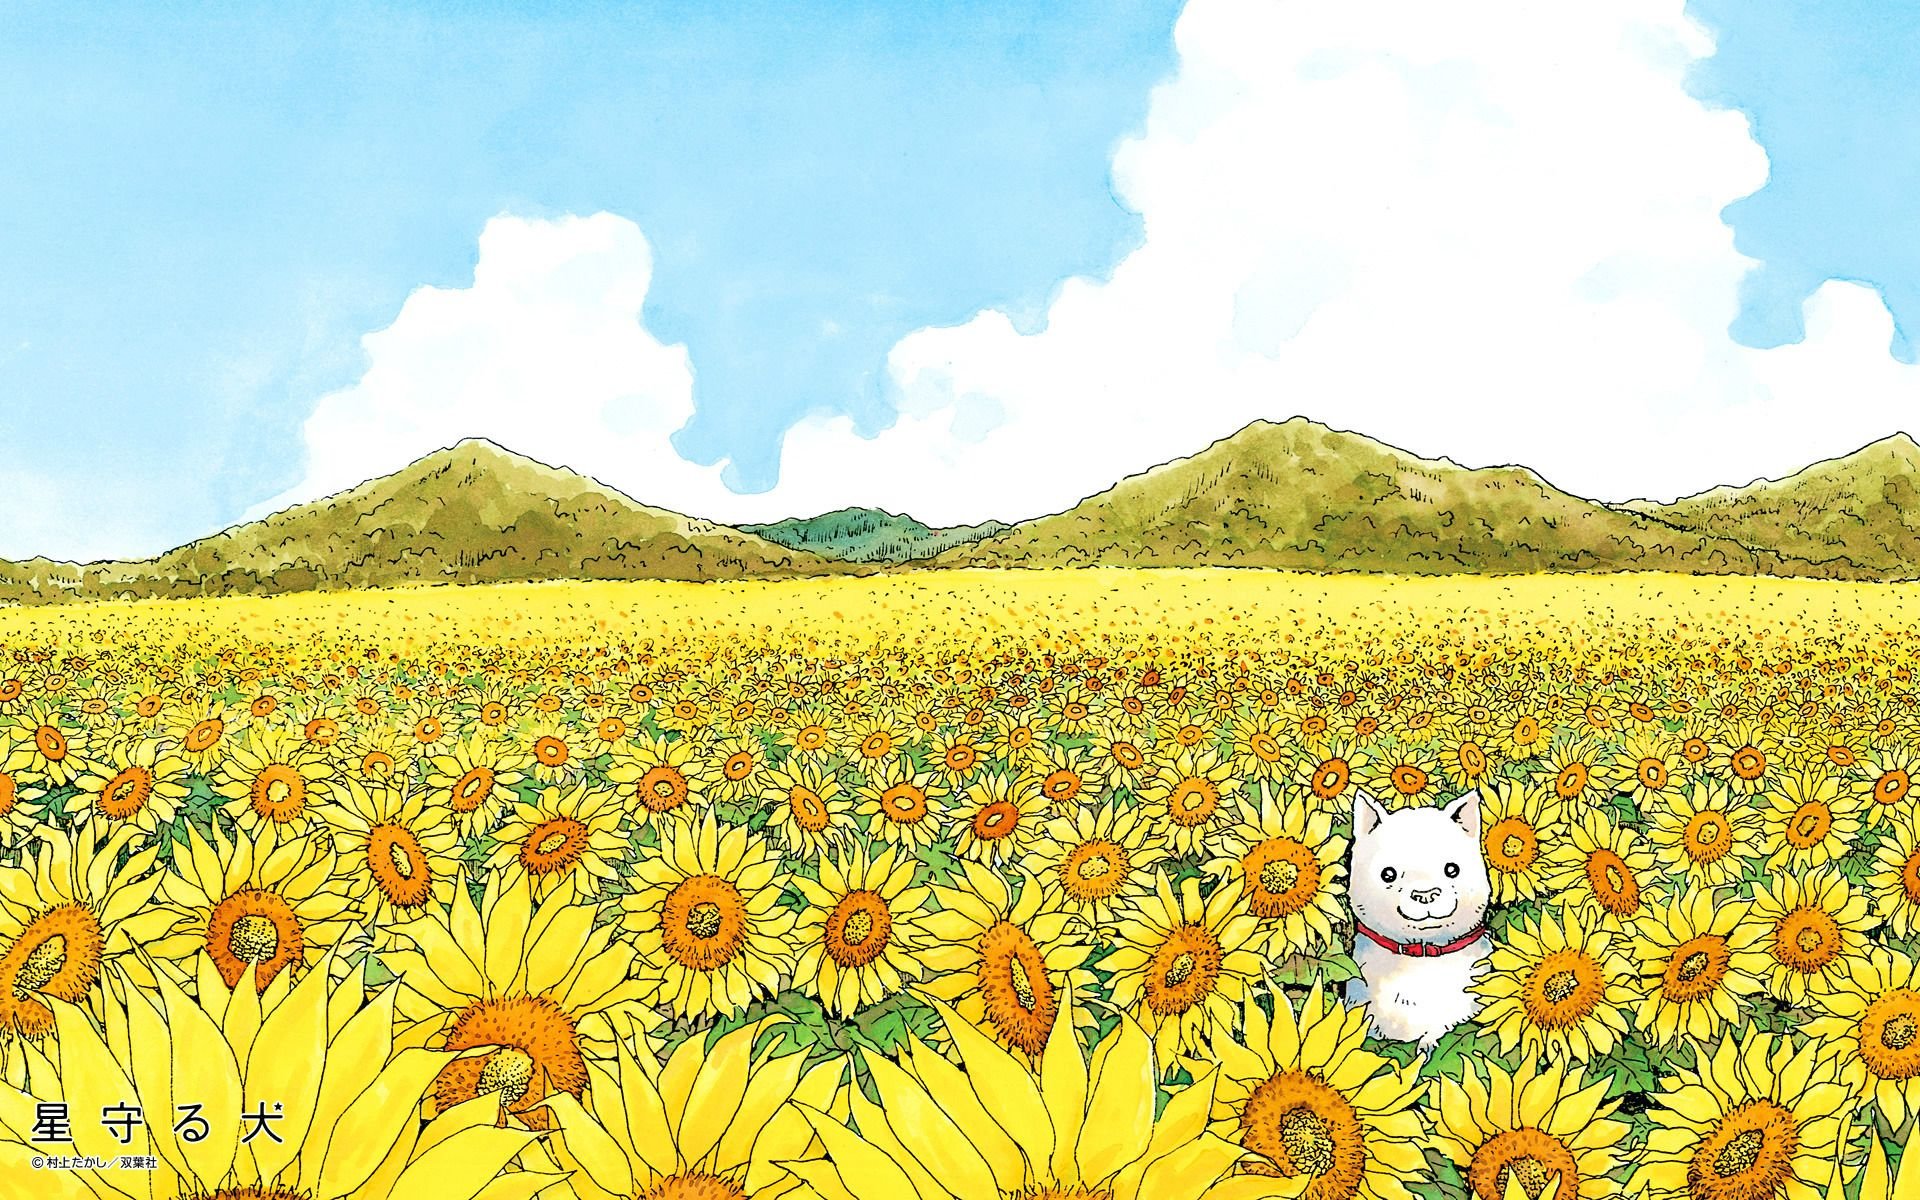 Takashi Murakami Flower Wallpaper Outlet GET 60 OFF  wwwislandcrematoriumie